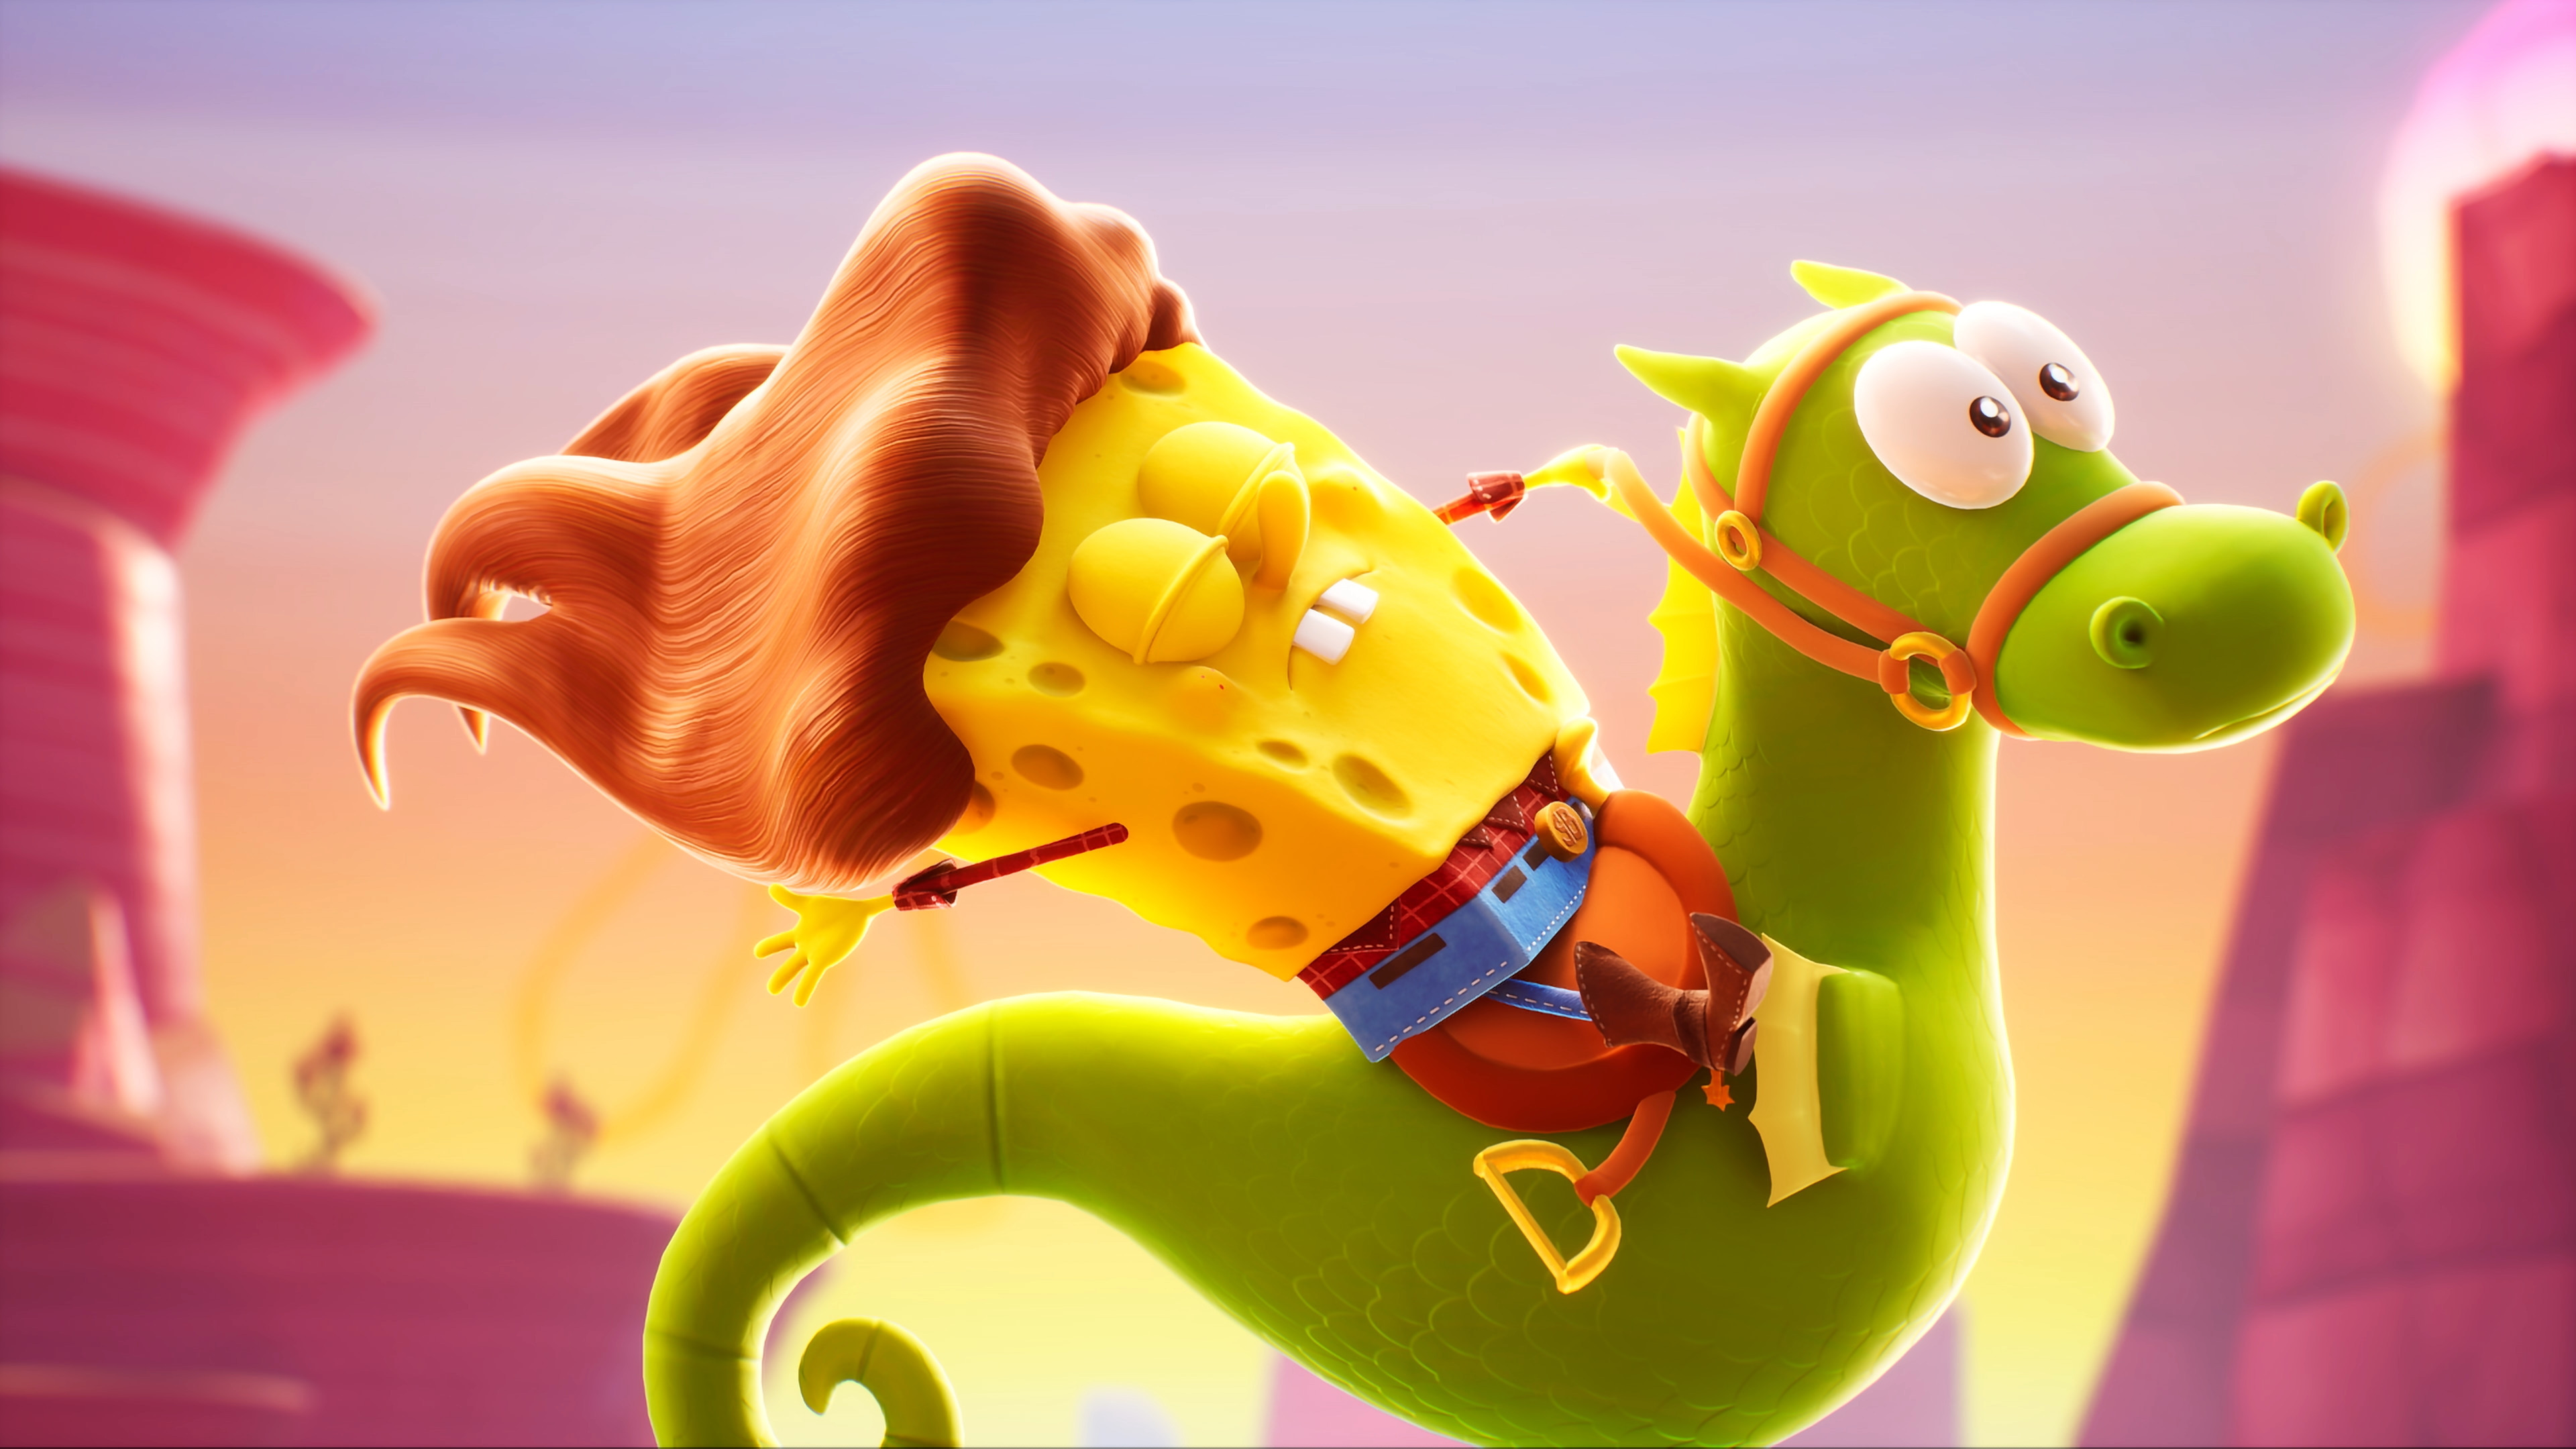 SpongeBob SquarePants: The Cosmic Shake HD Wallpaper and Background